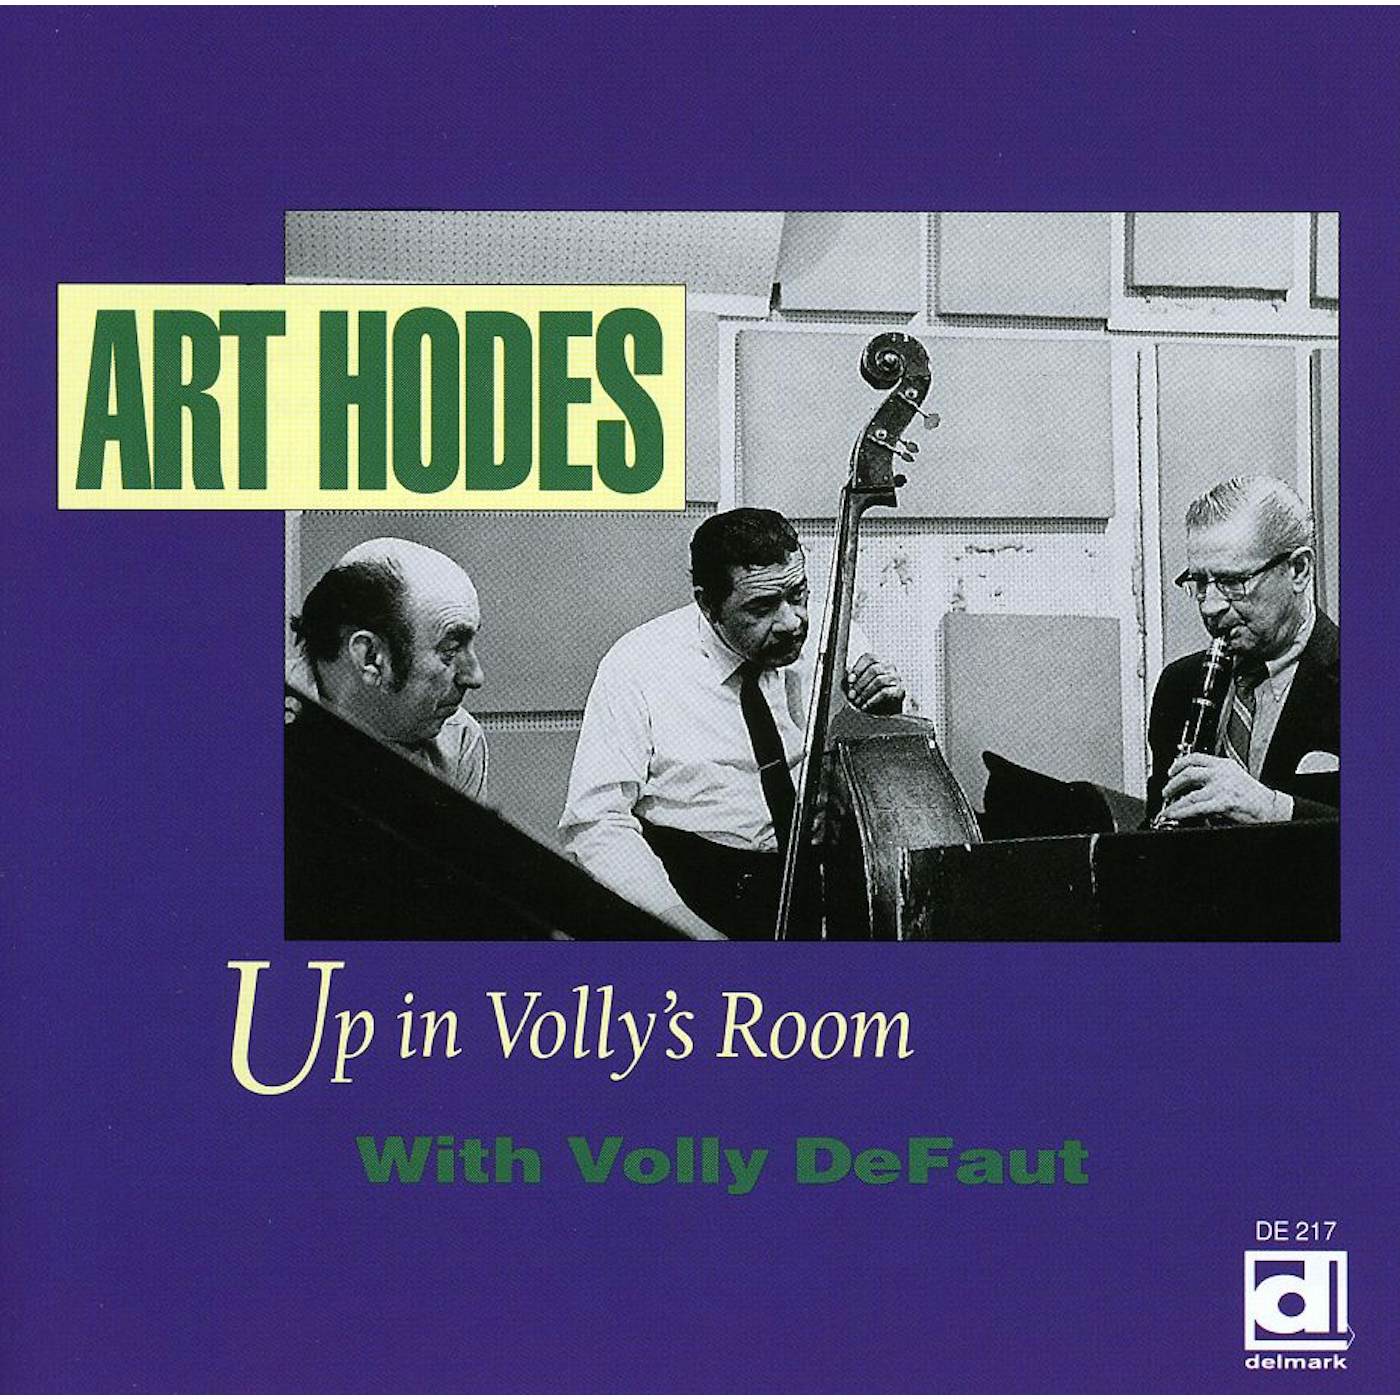 Art Hodes UP IN VOLLEY'S ROOM CD